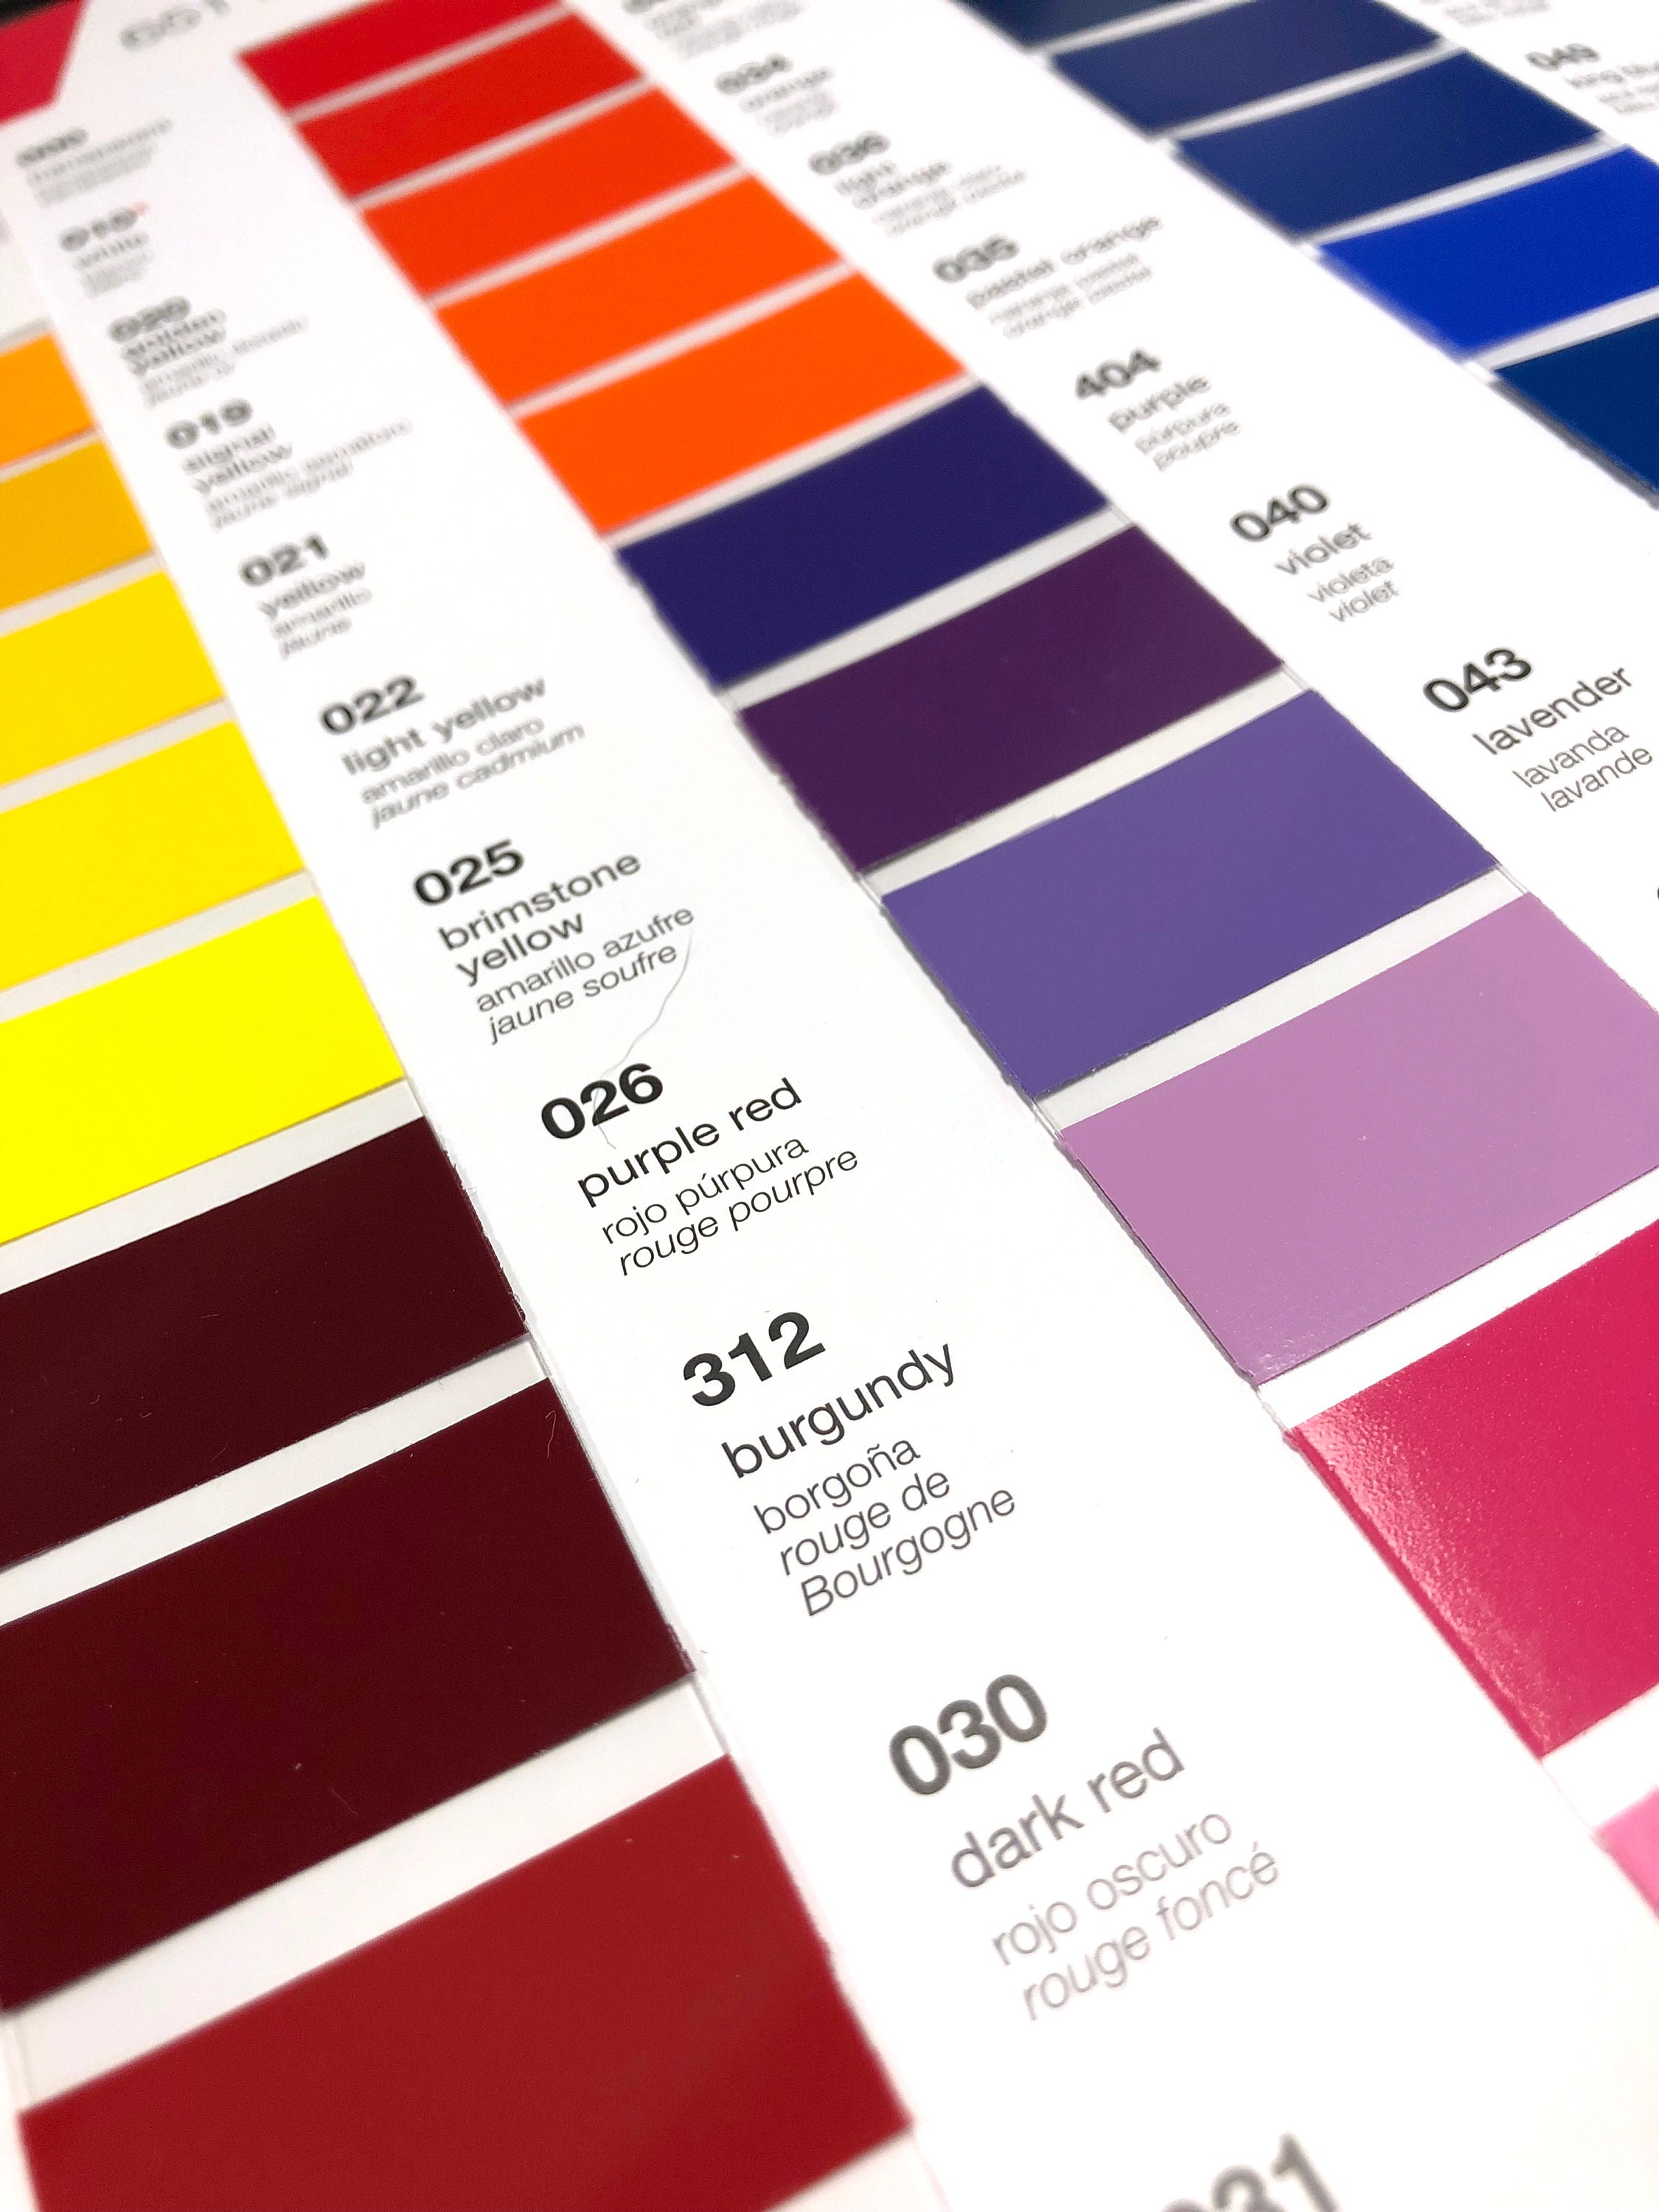 Oracal 651 Color Chart, Vinyl Color Chart, Color Sample, Sample